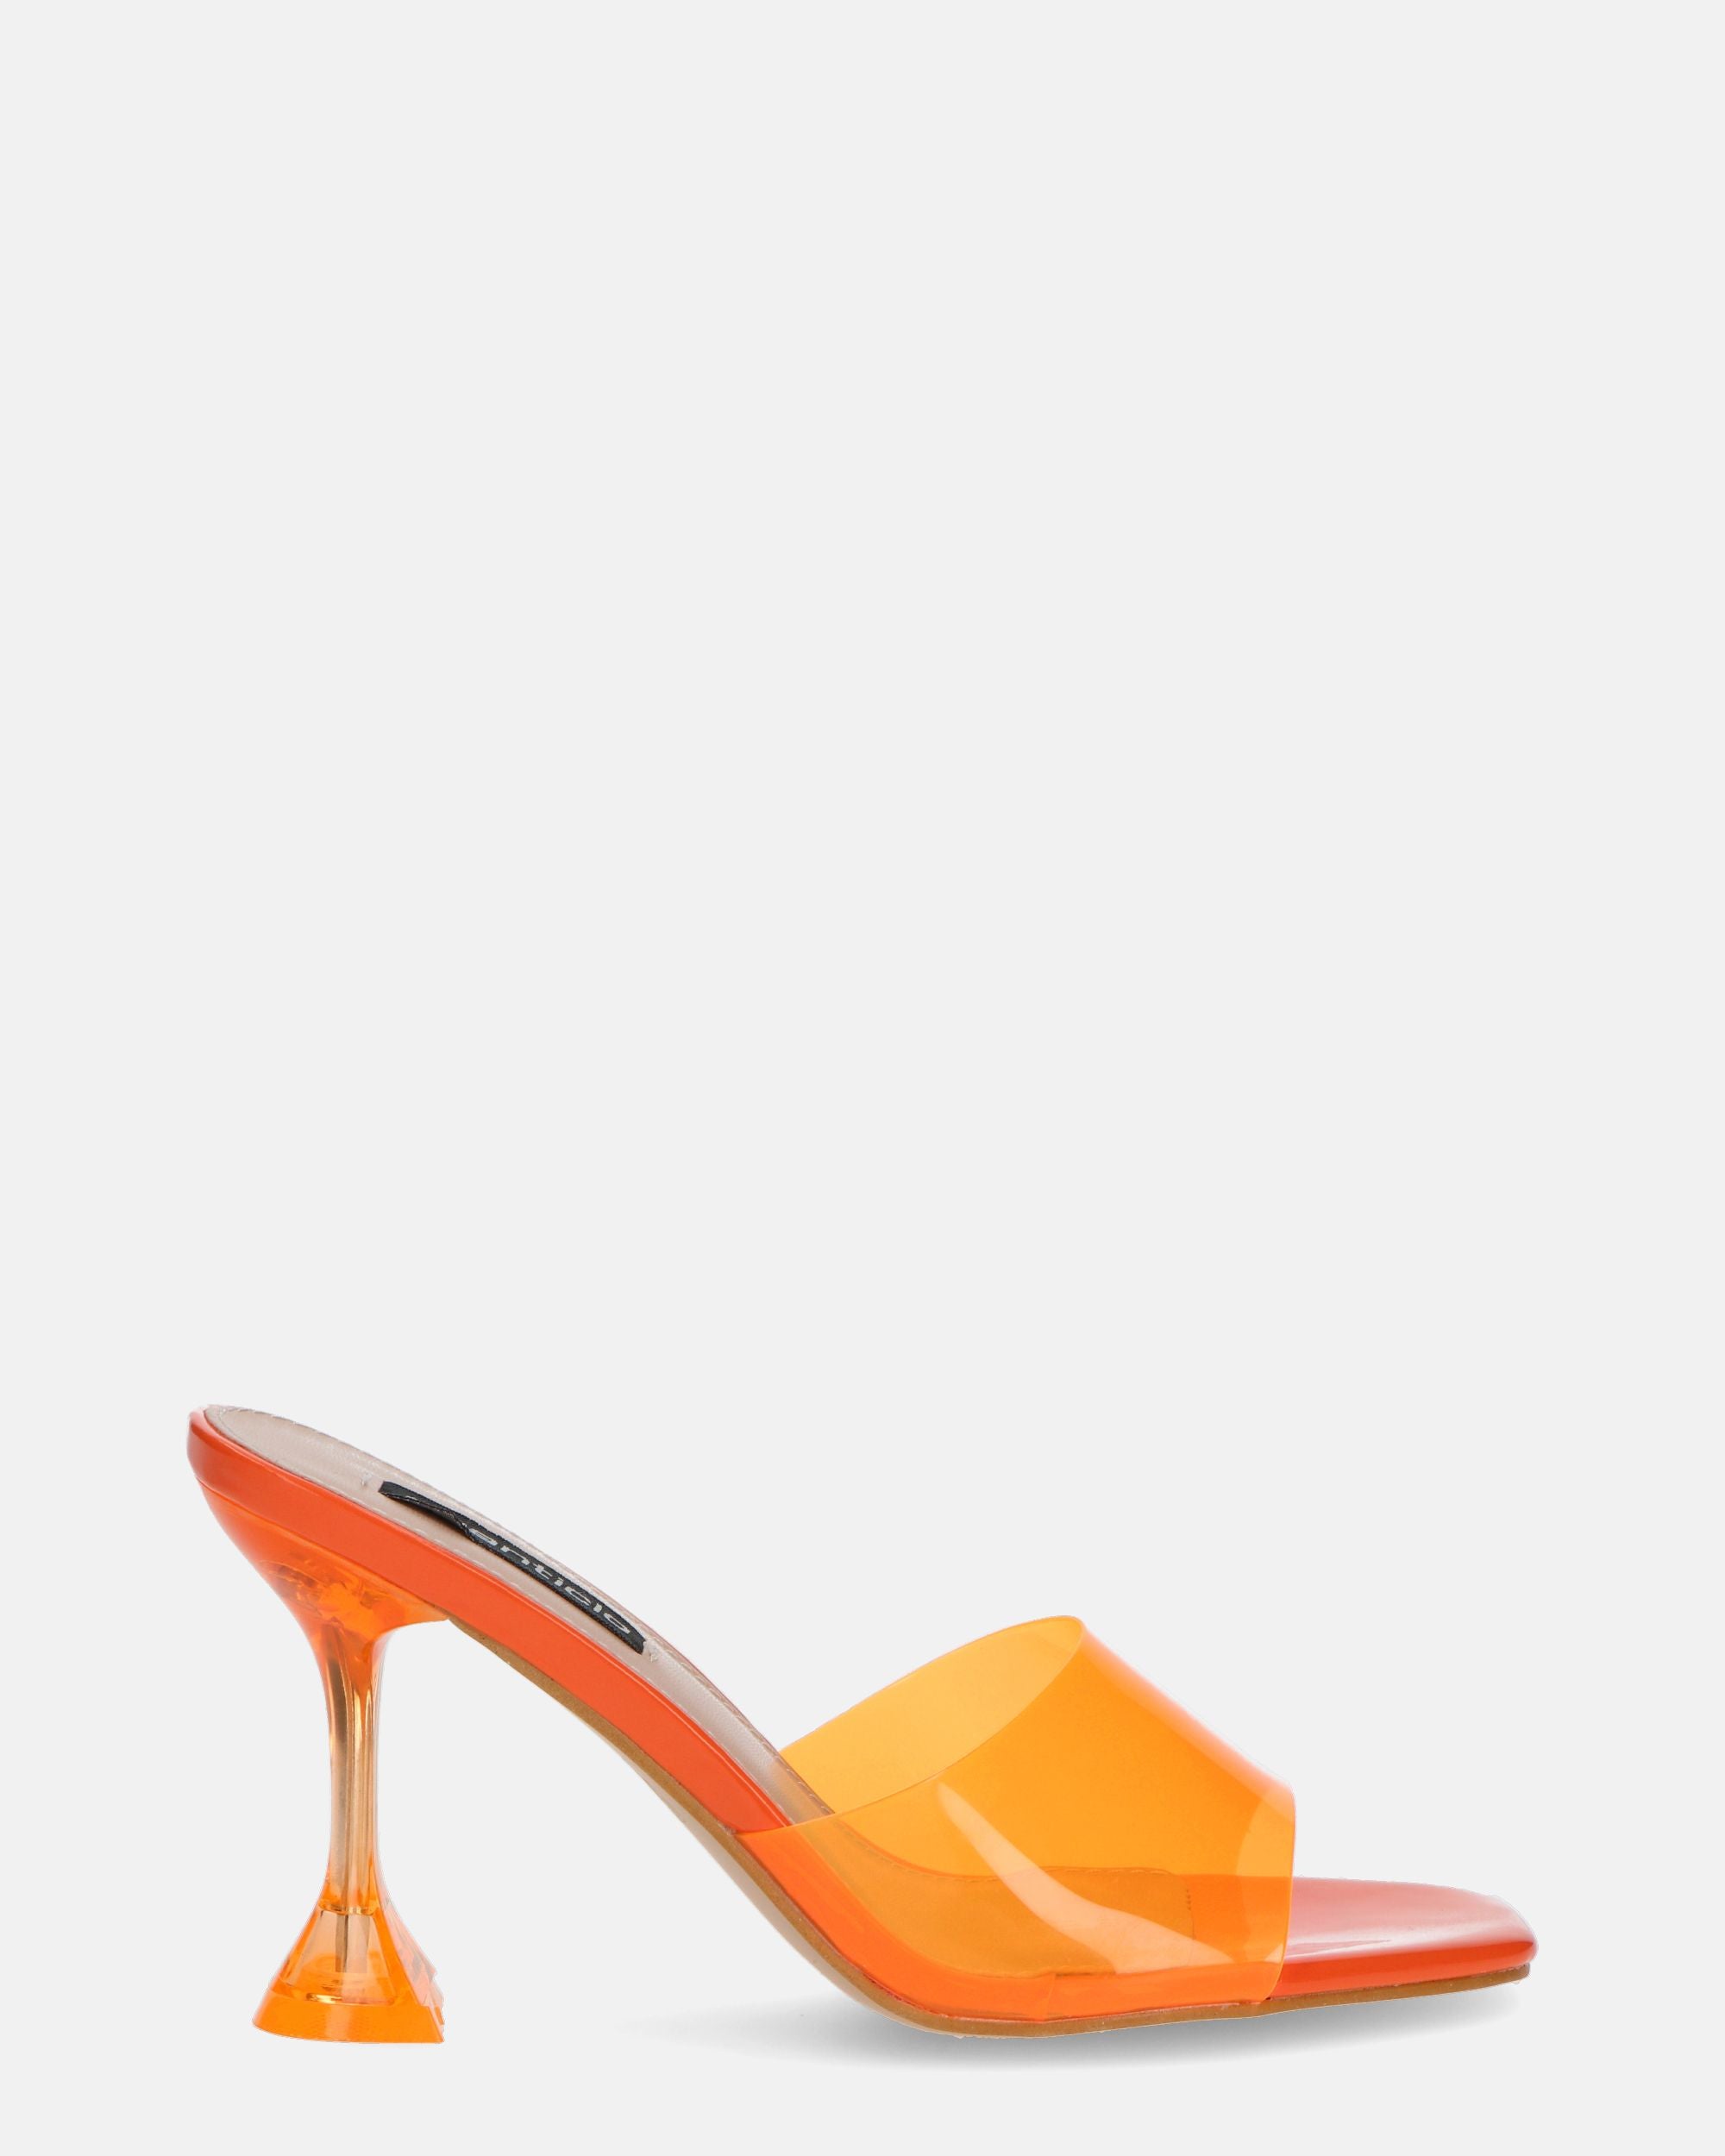 FIAMMA - sandale à talon en plexiglas orange avec semelle en PU